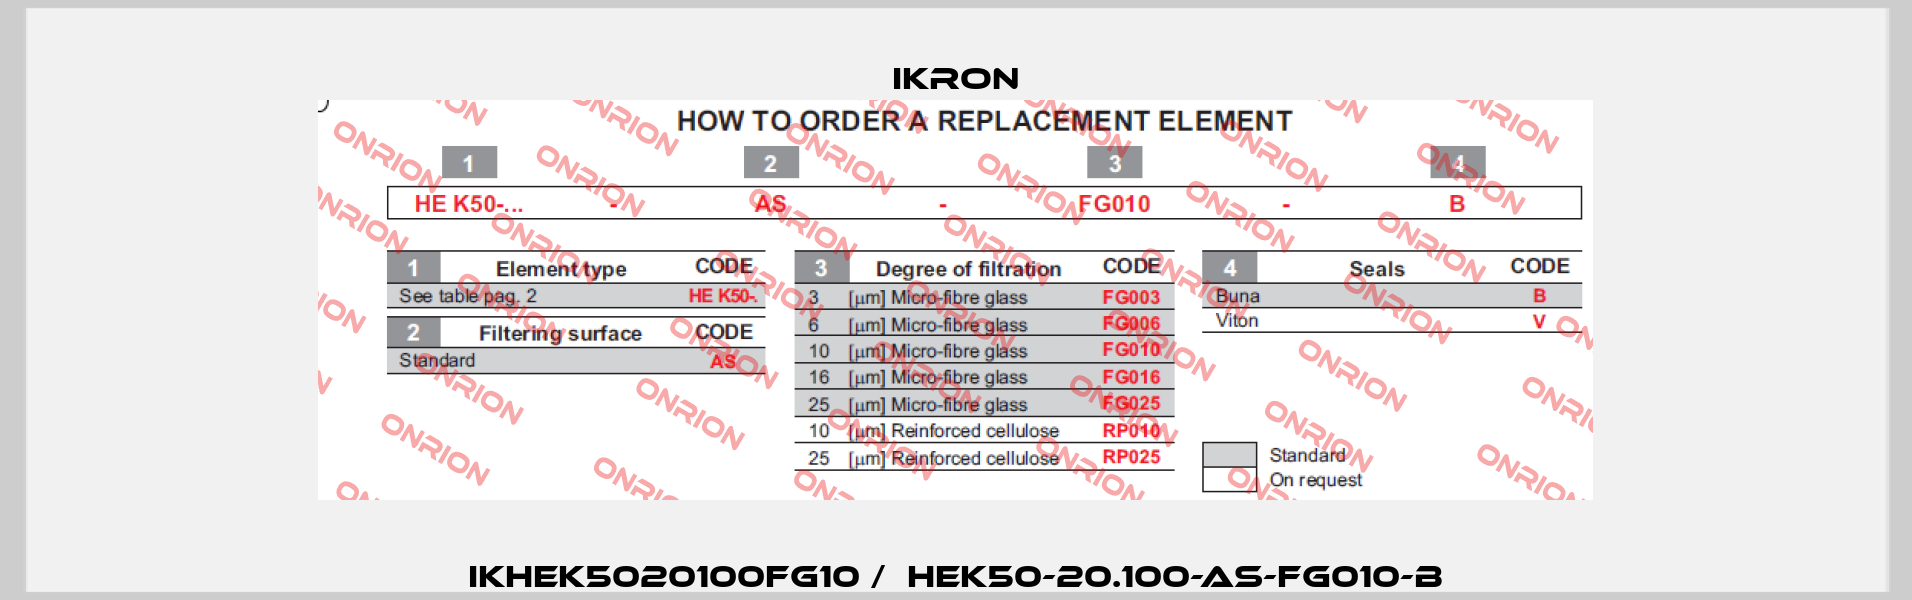 IKHEK5020100FG10 /  HEK50-20.100-AS-FG010-B Ikron